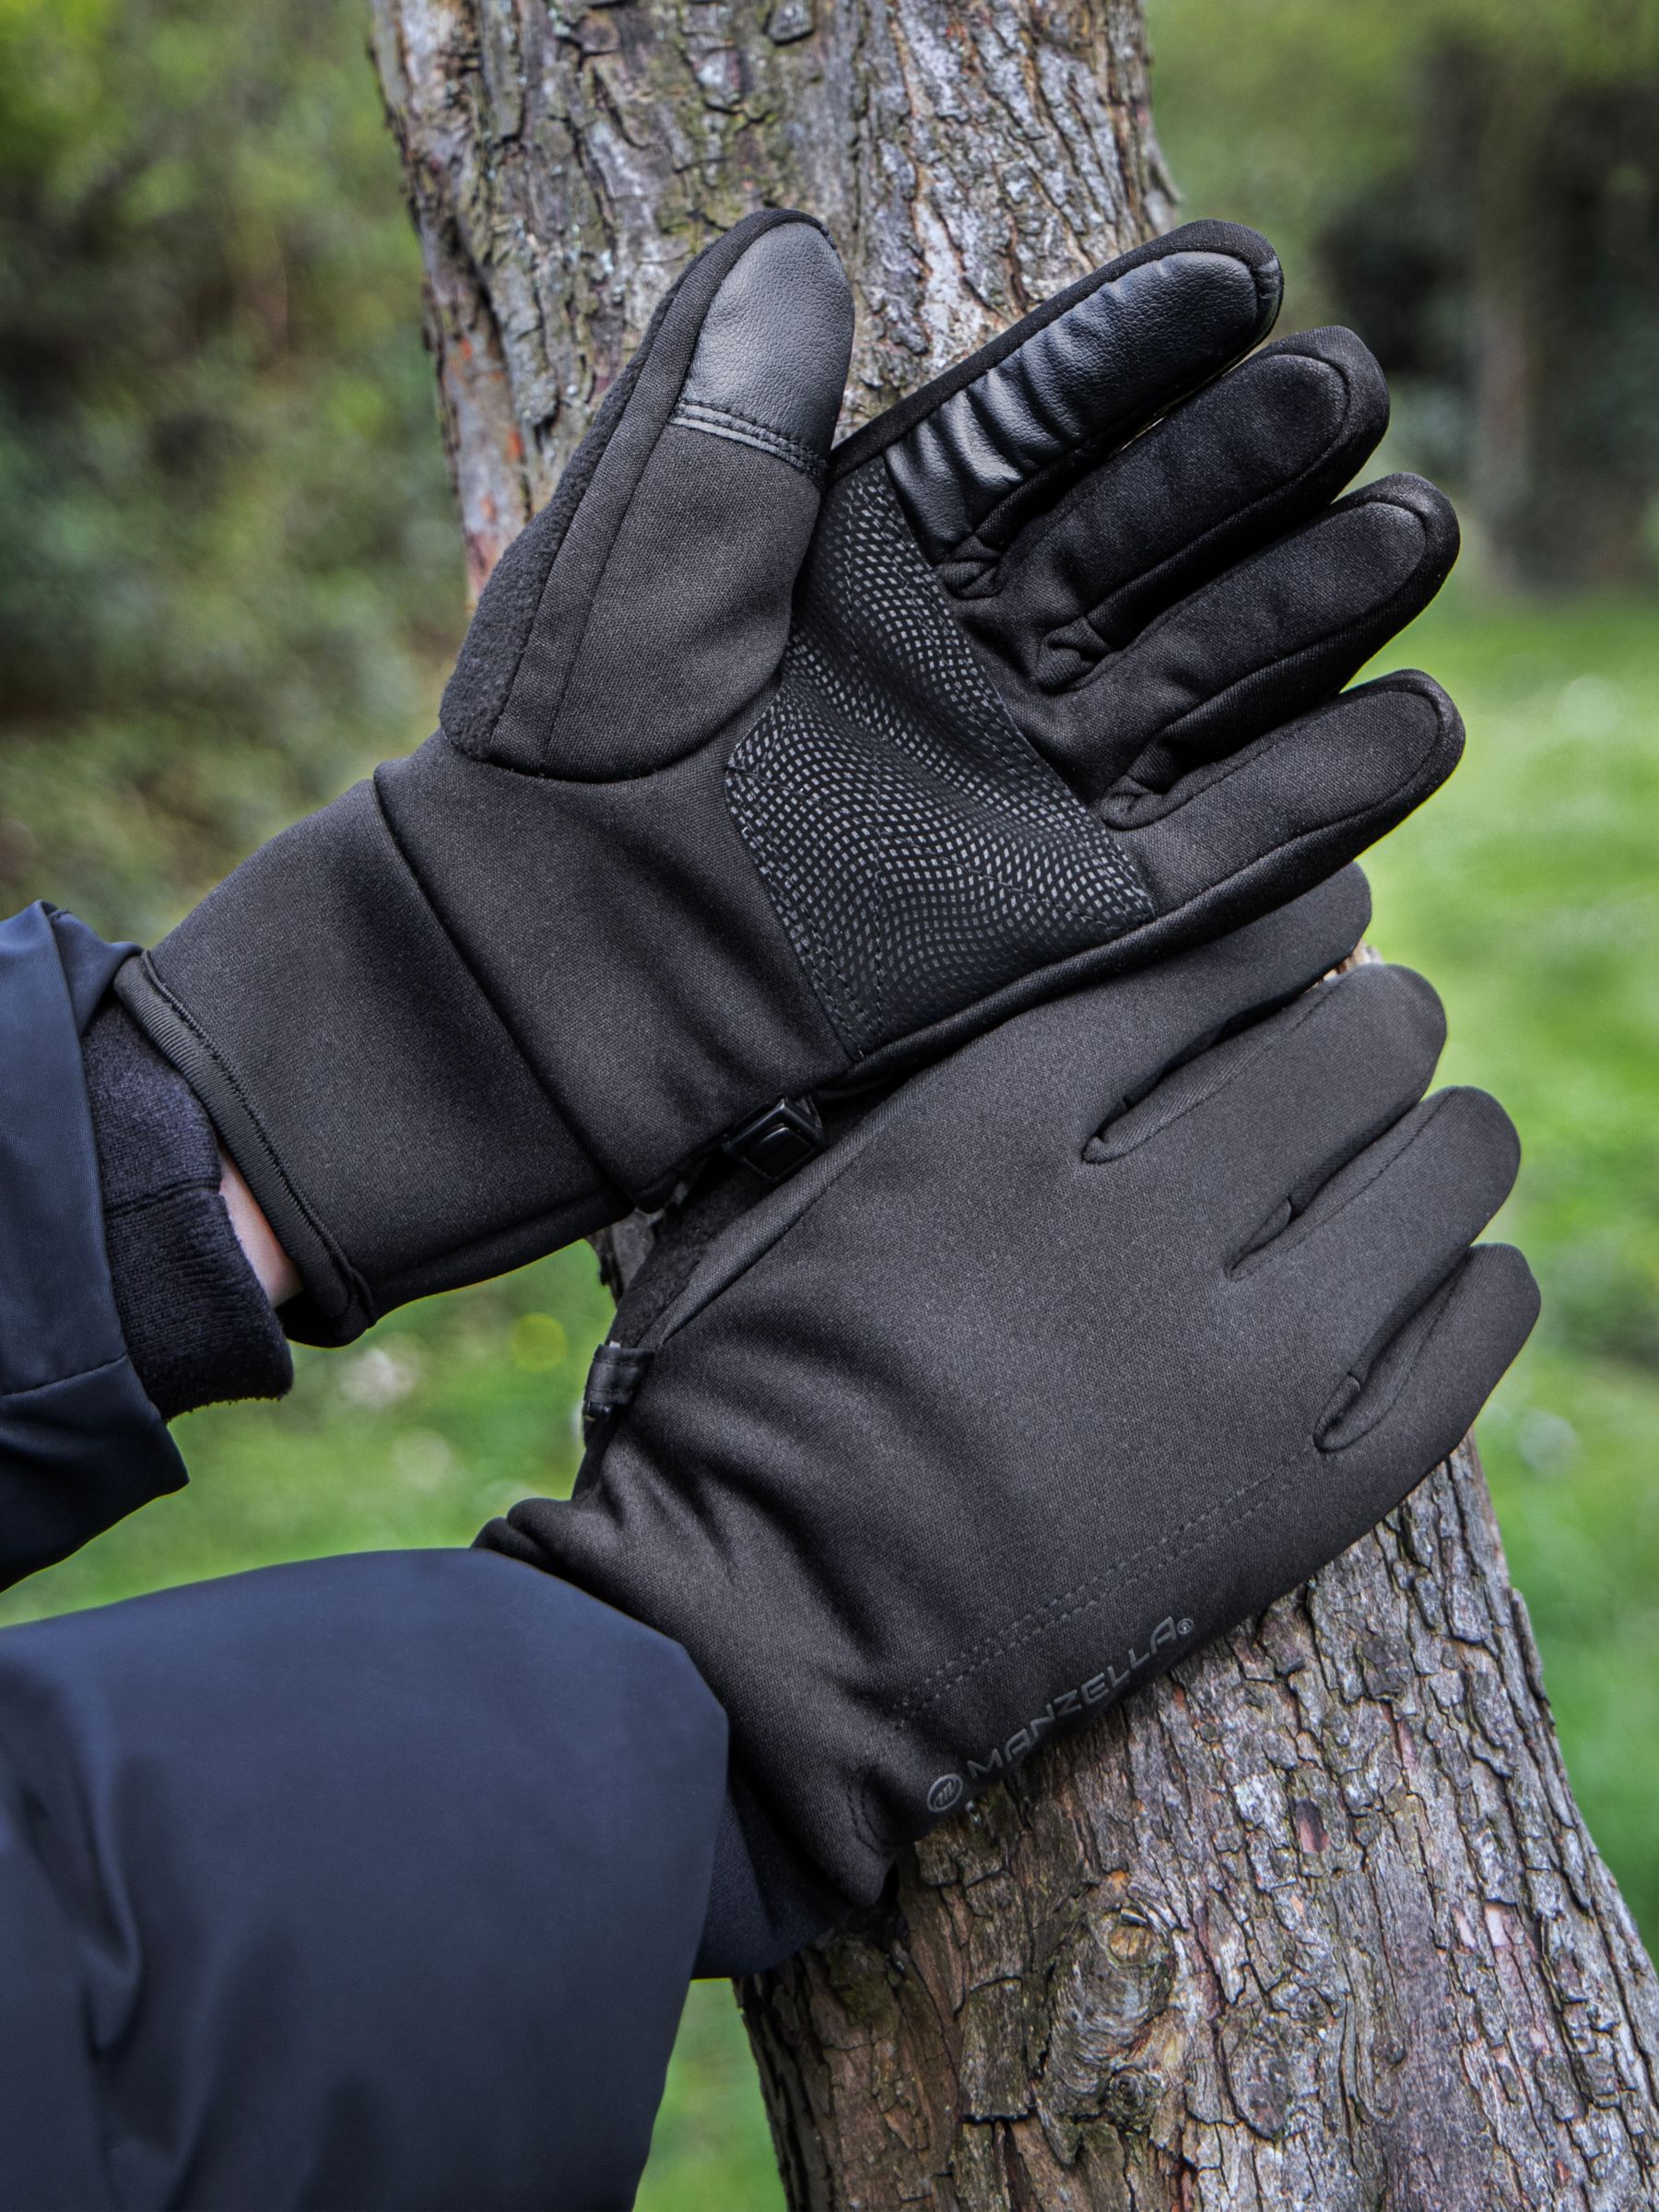 totes Manzella Gloves, Black at John Lewis & Partners